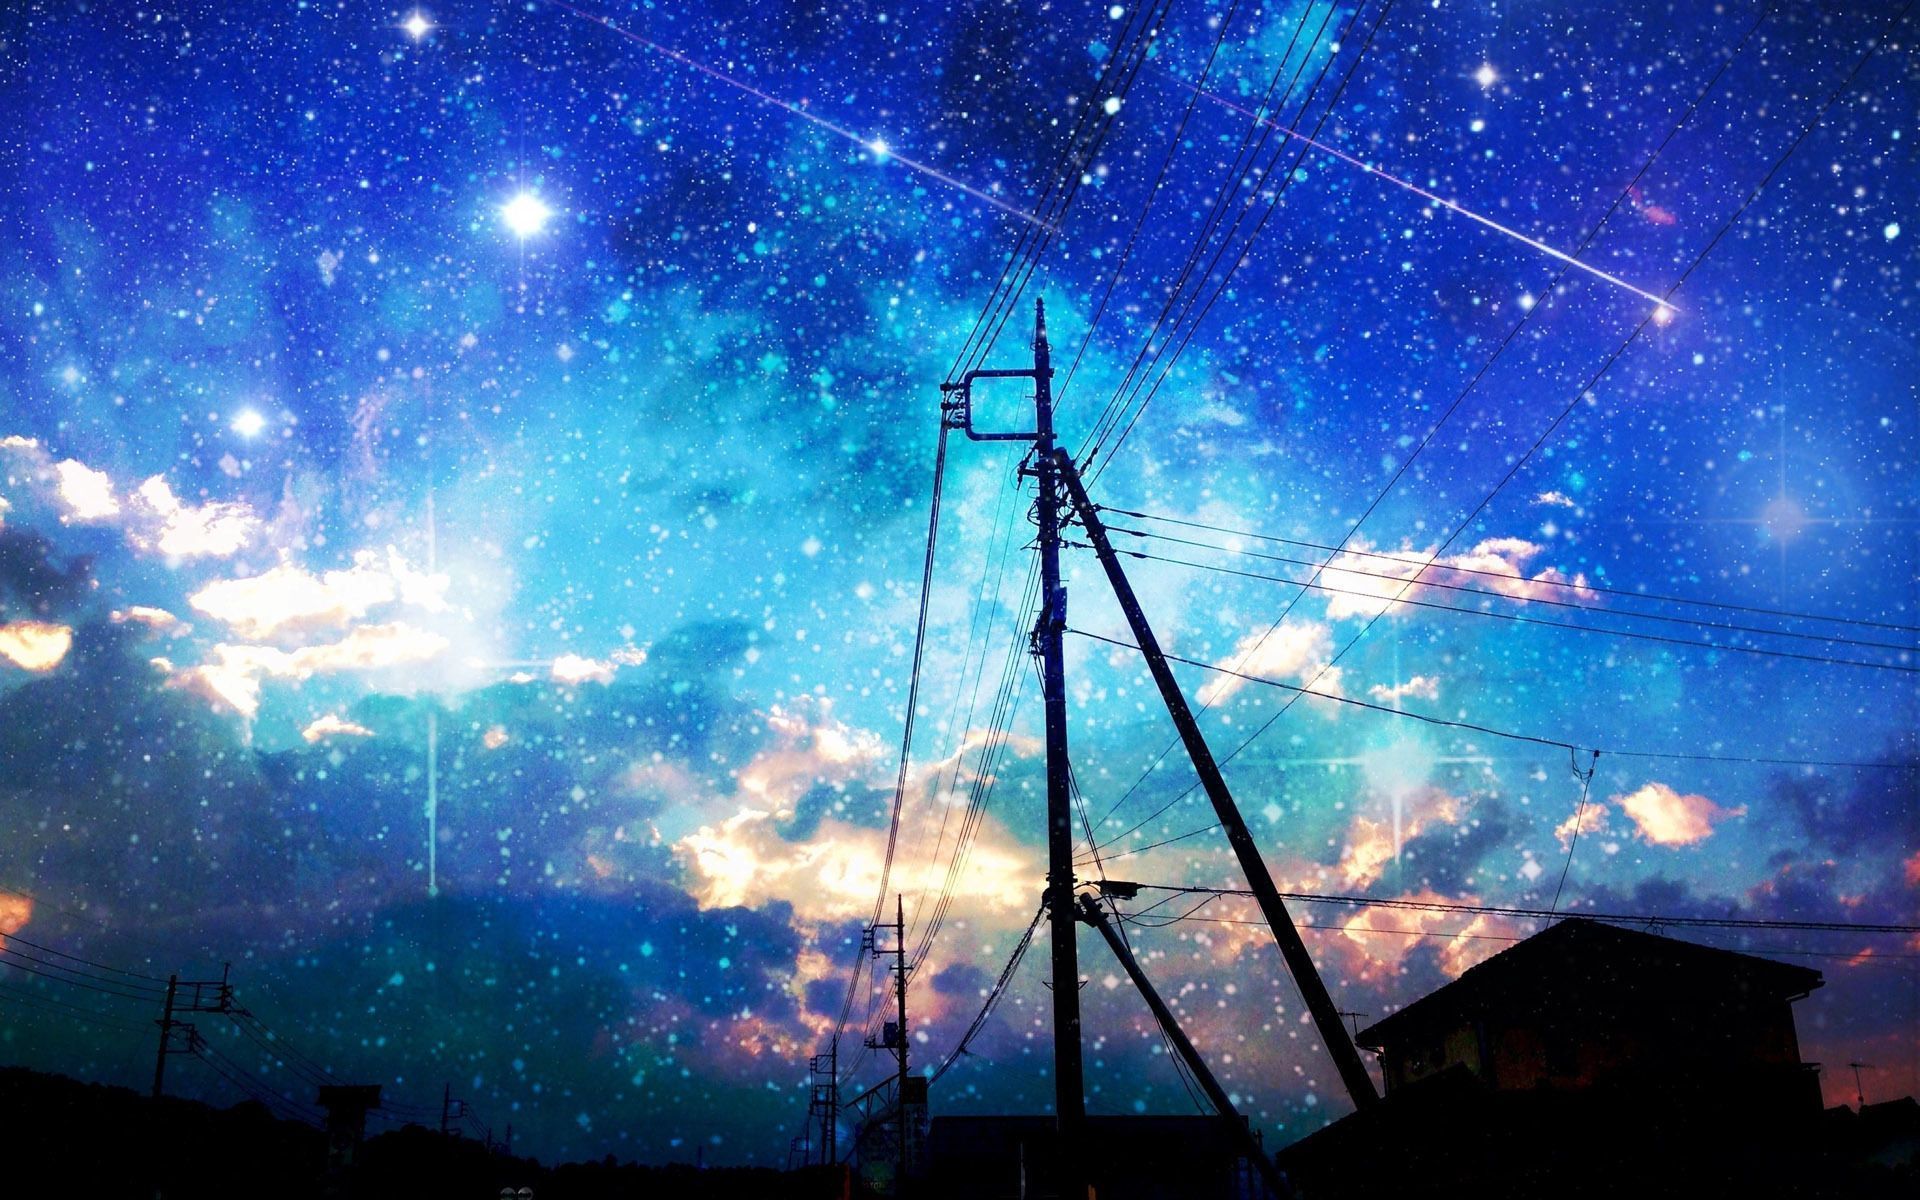 Starry Sky wallpaper 1920x1200